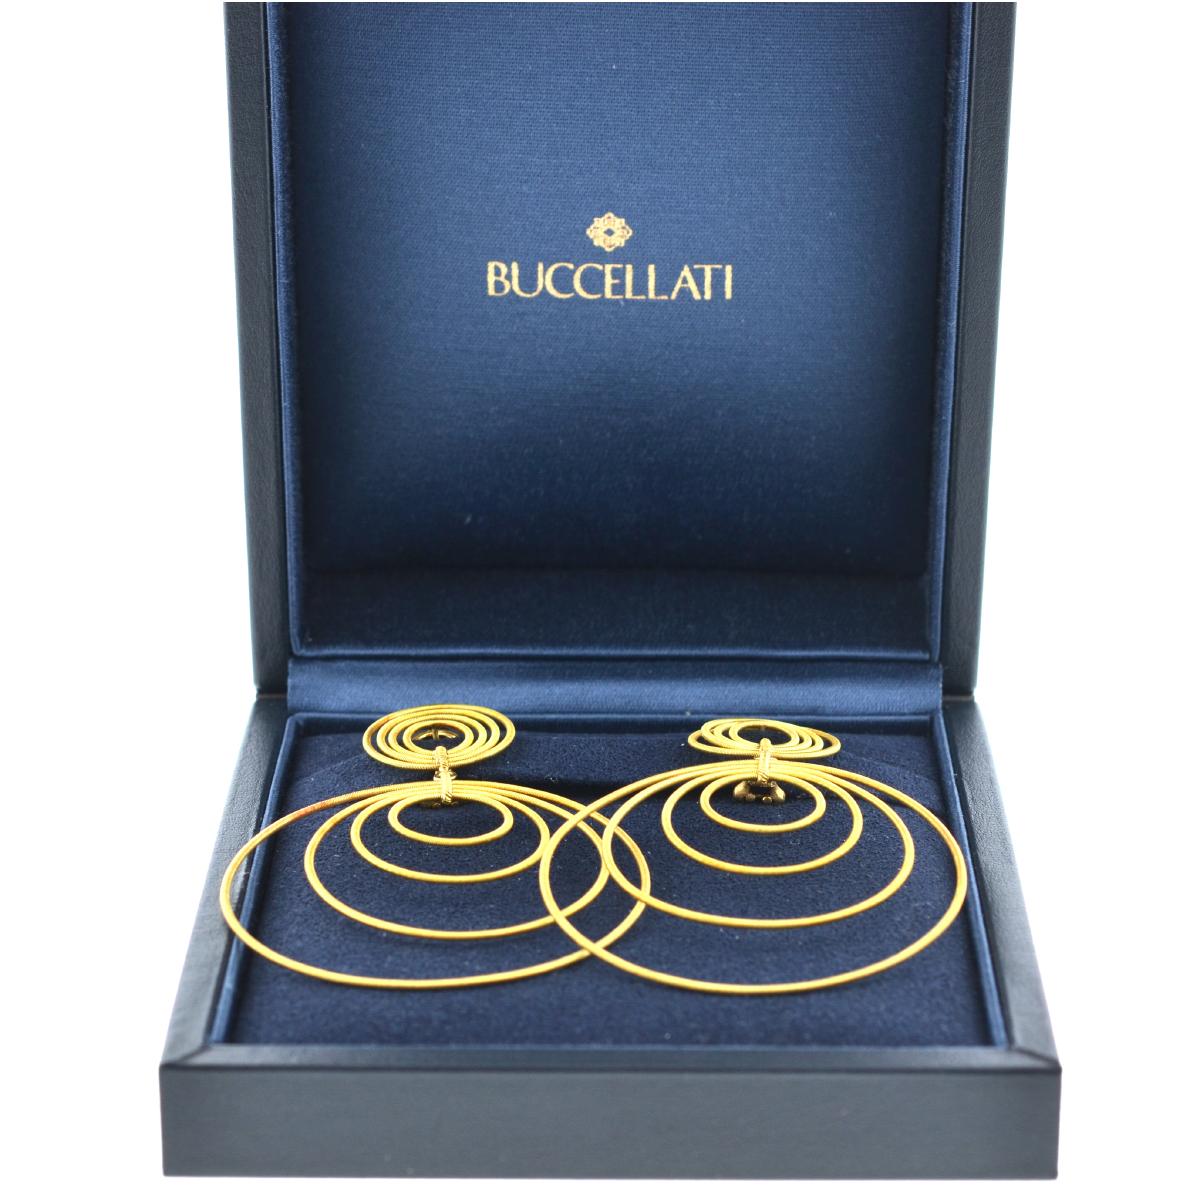 Buccellati 18k Gold Hawaii Double-Drop Earrings

Designer - Buccellati

Style - Hawaii Double-Drop Earrings

Metal - 18k Yellow Gold

Measurements - 3.25